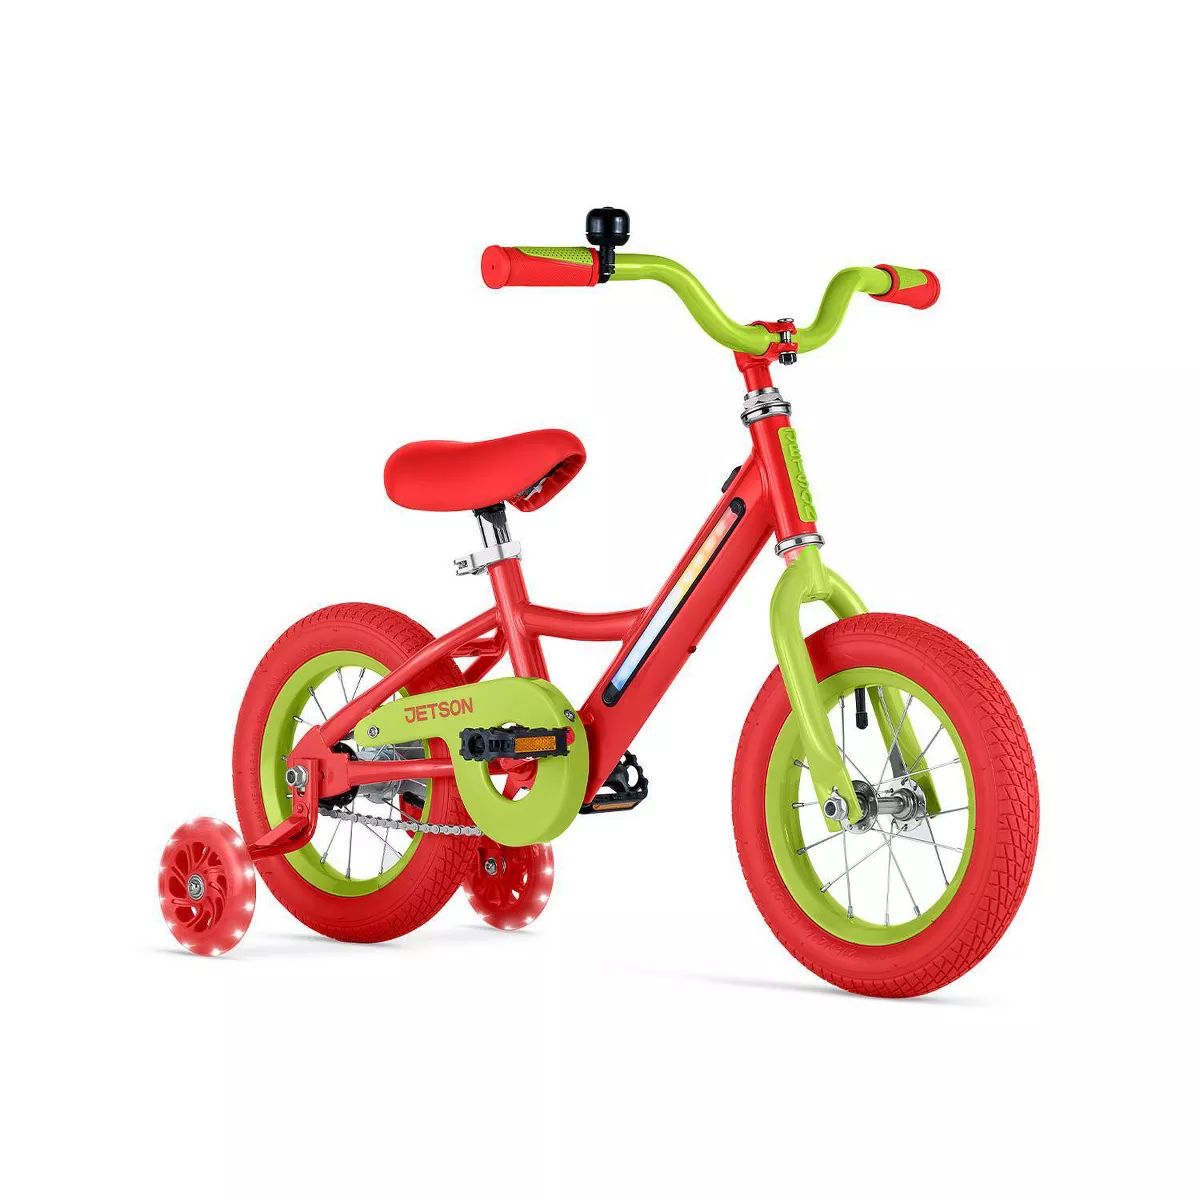 Jetson Light Rider 12" Kids' Light Up Bike - Red/Lime | Target